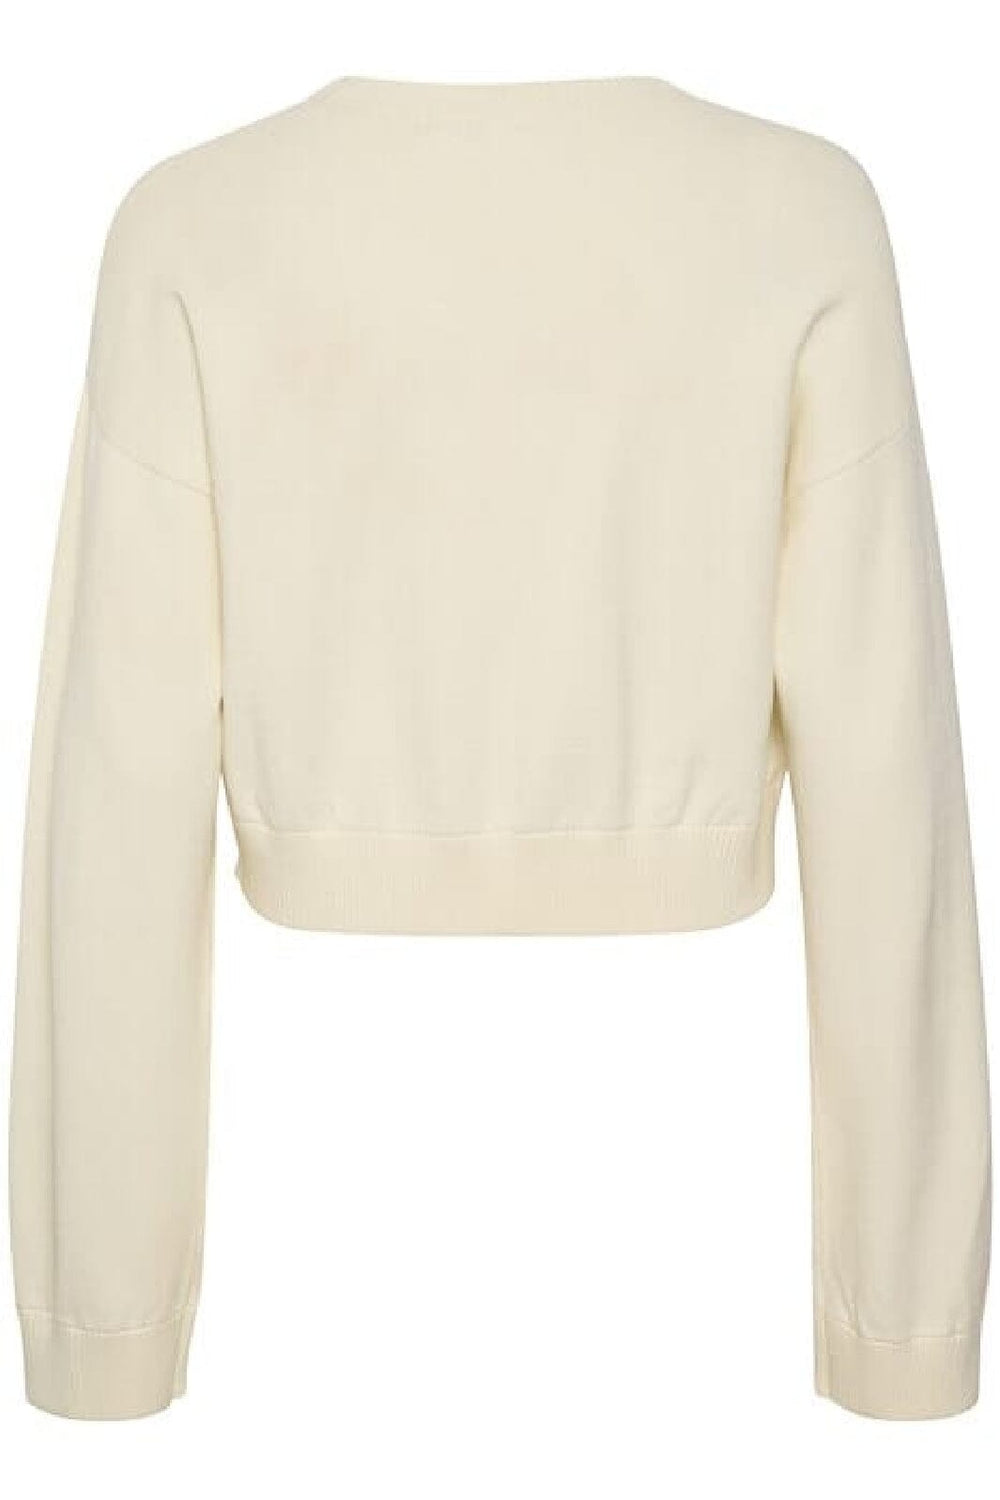 Gestuz - AyaGZ cropped pullover - Egret Sweatshirts 